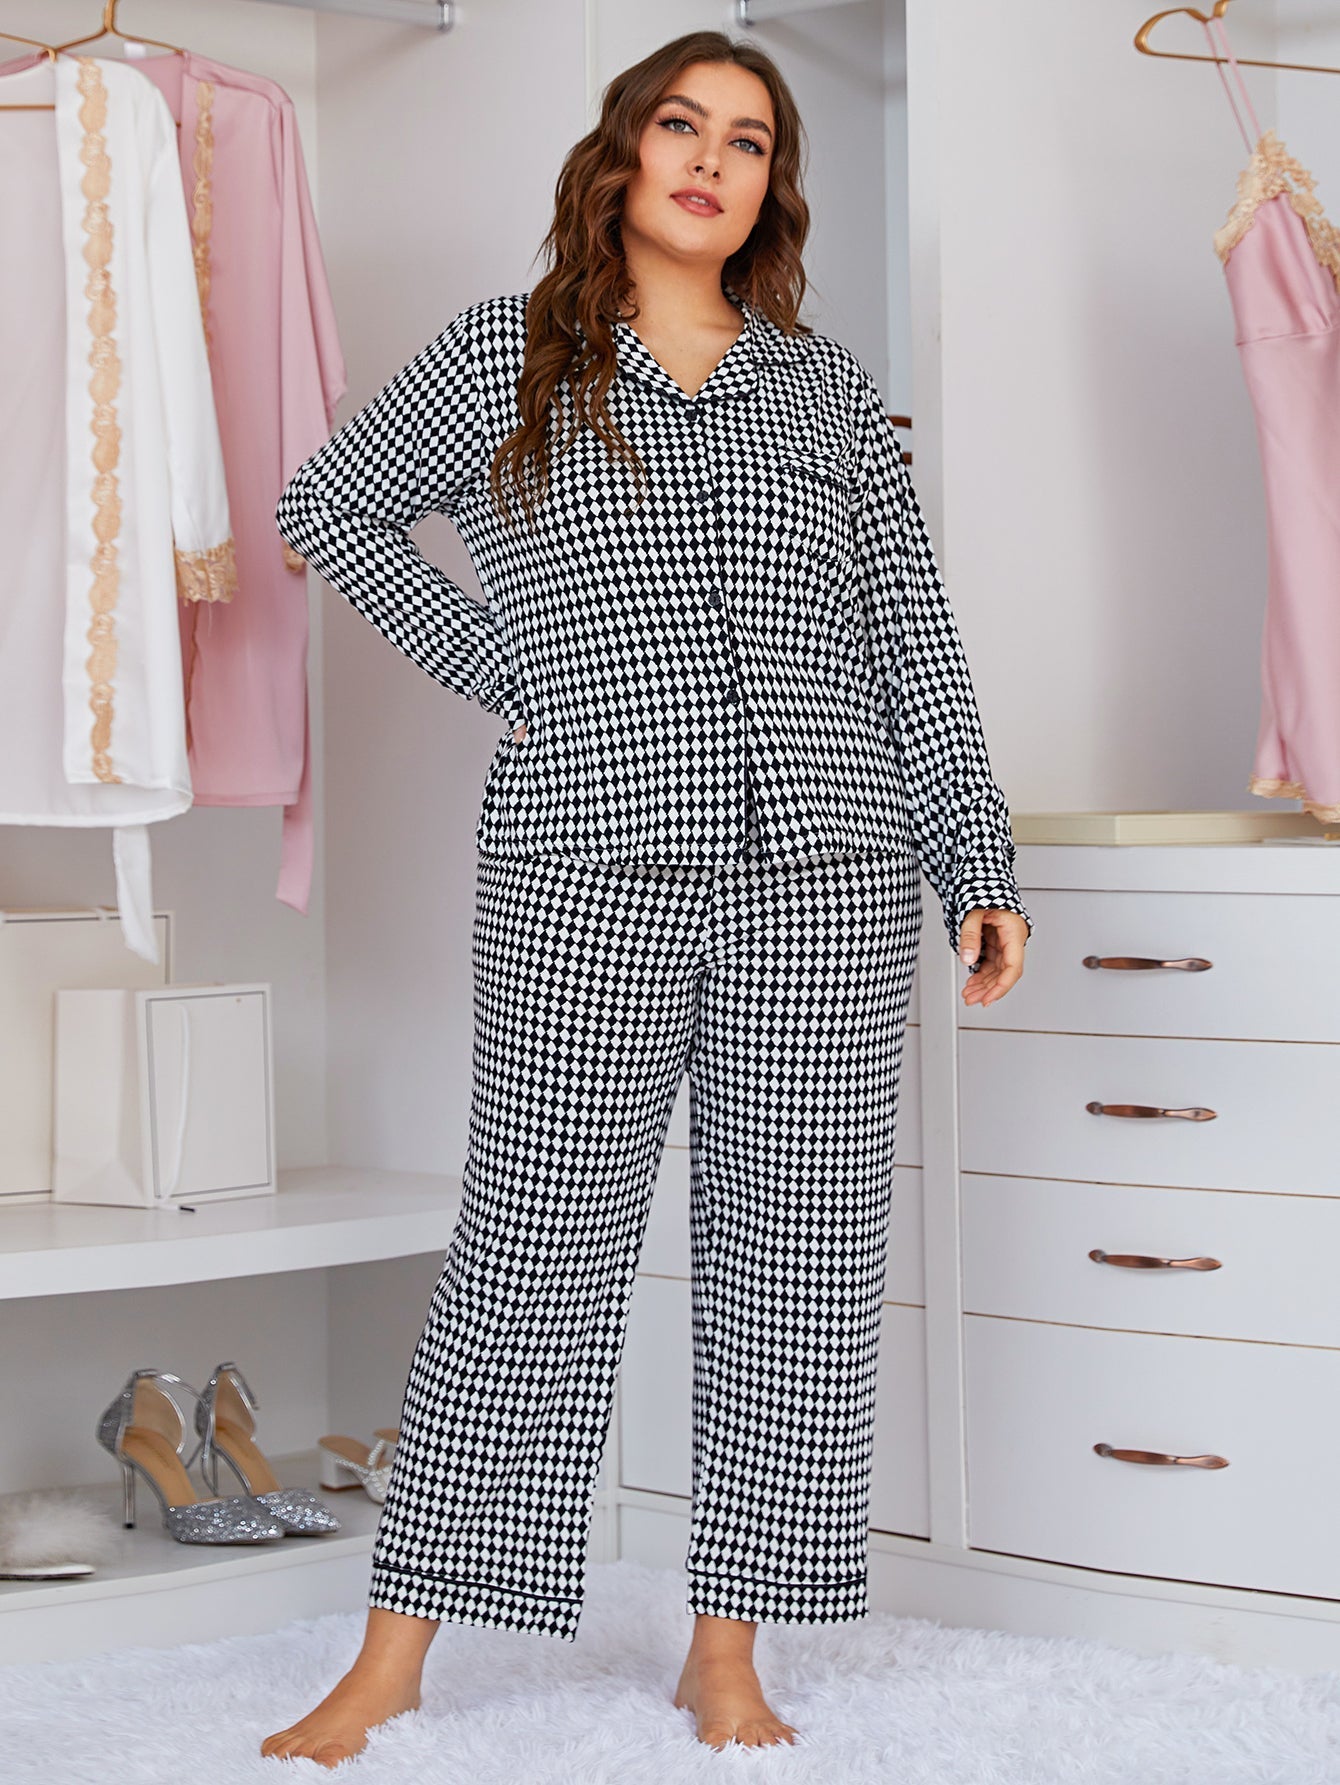 Plus Size Womens' Plaid Pajama Set-Long Sleeve Shirt and Pajama Pants Pj Set;Home Nightwear Sleepsuit Loungewear set,XL-4XL Sai Feel